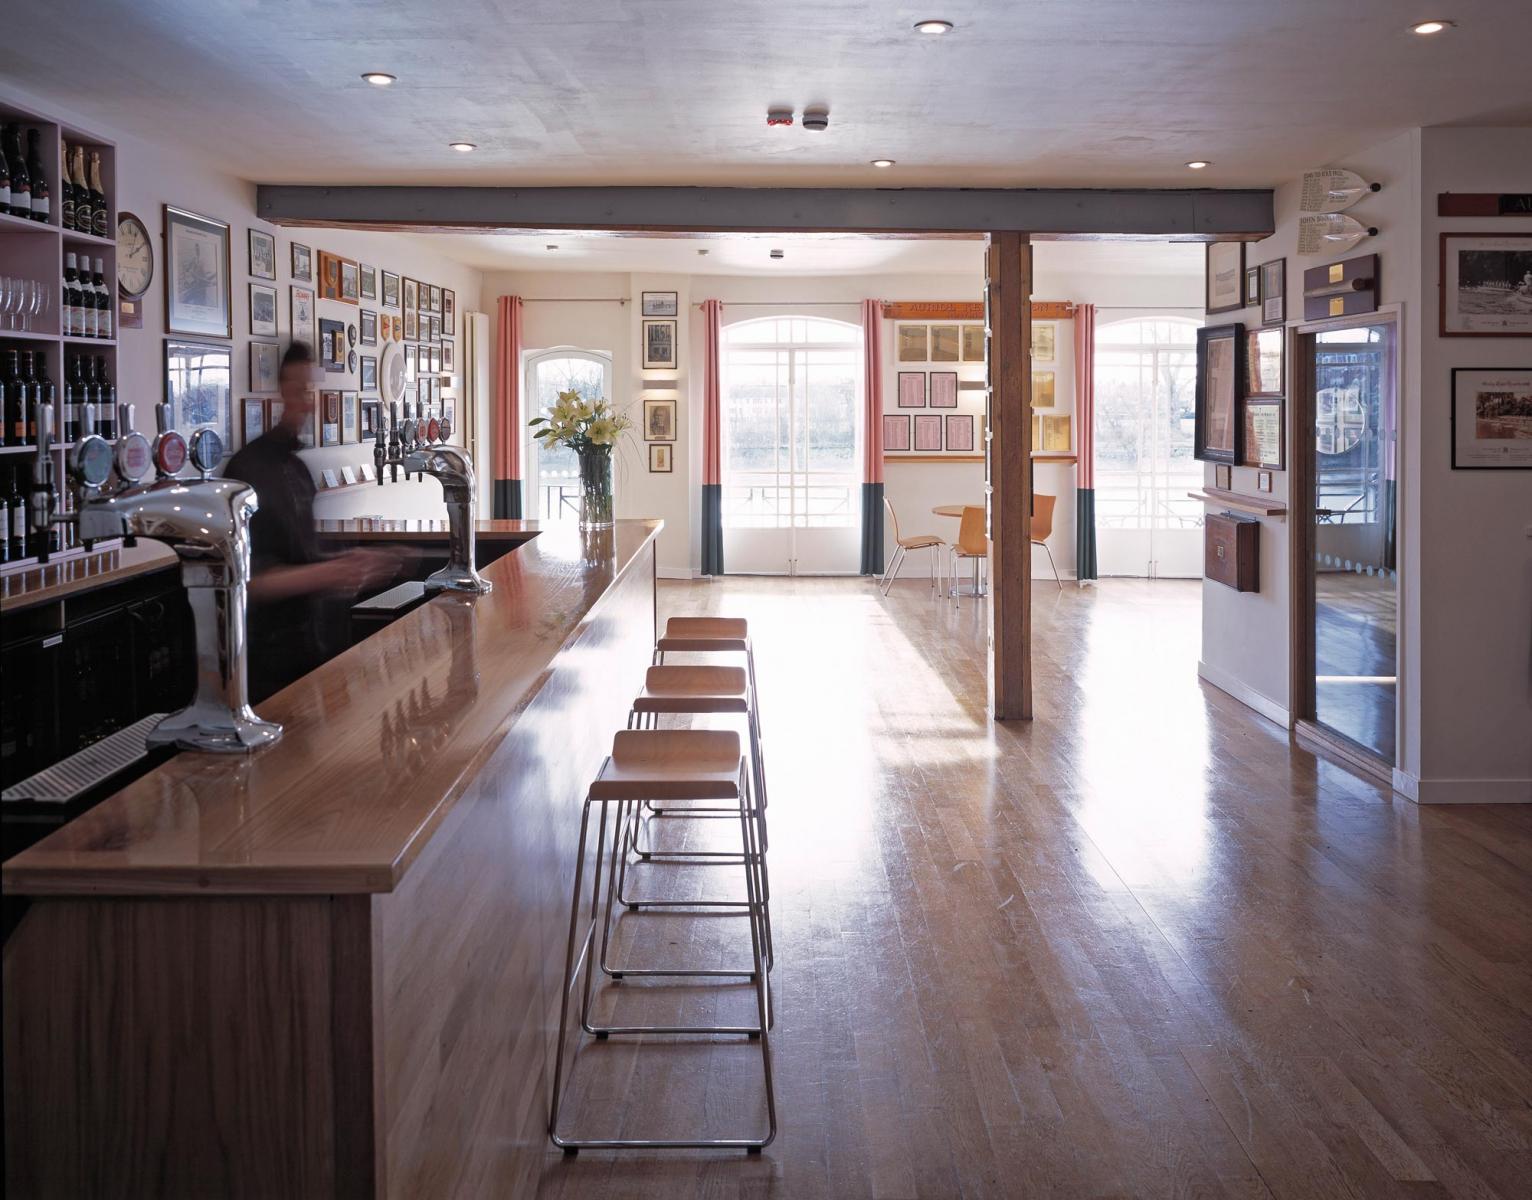 Auriol and Kensington Rowing Club - Interior view next to the bar